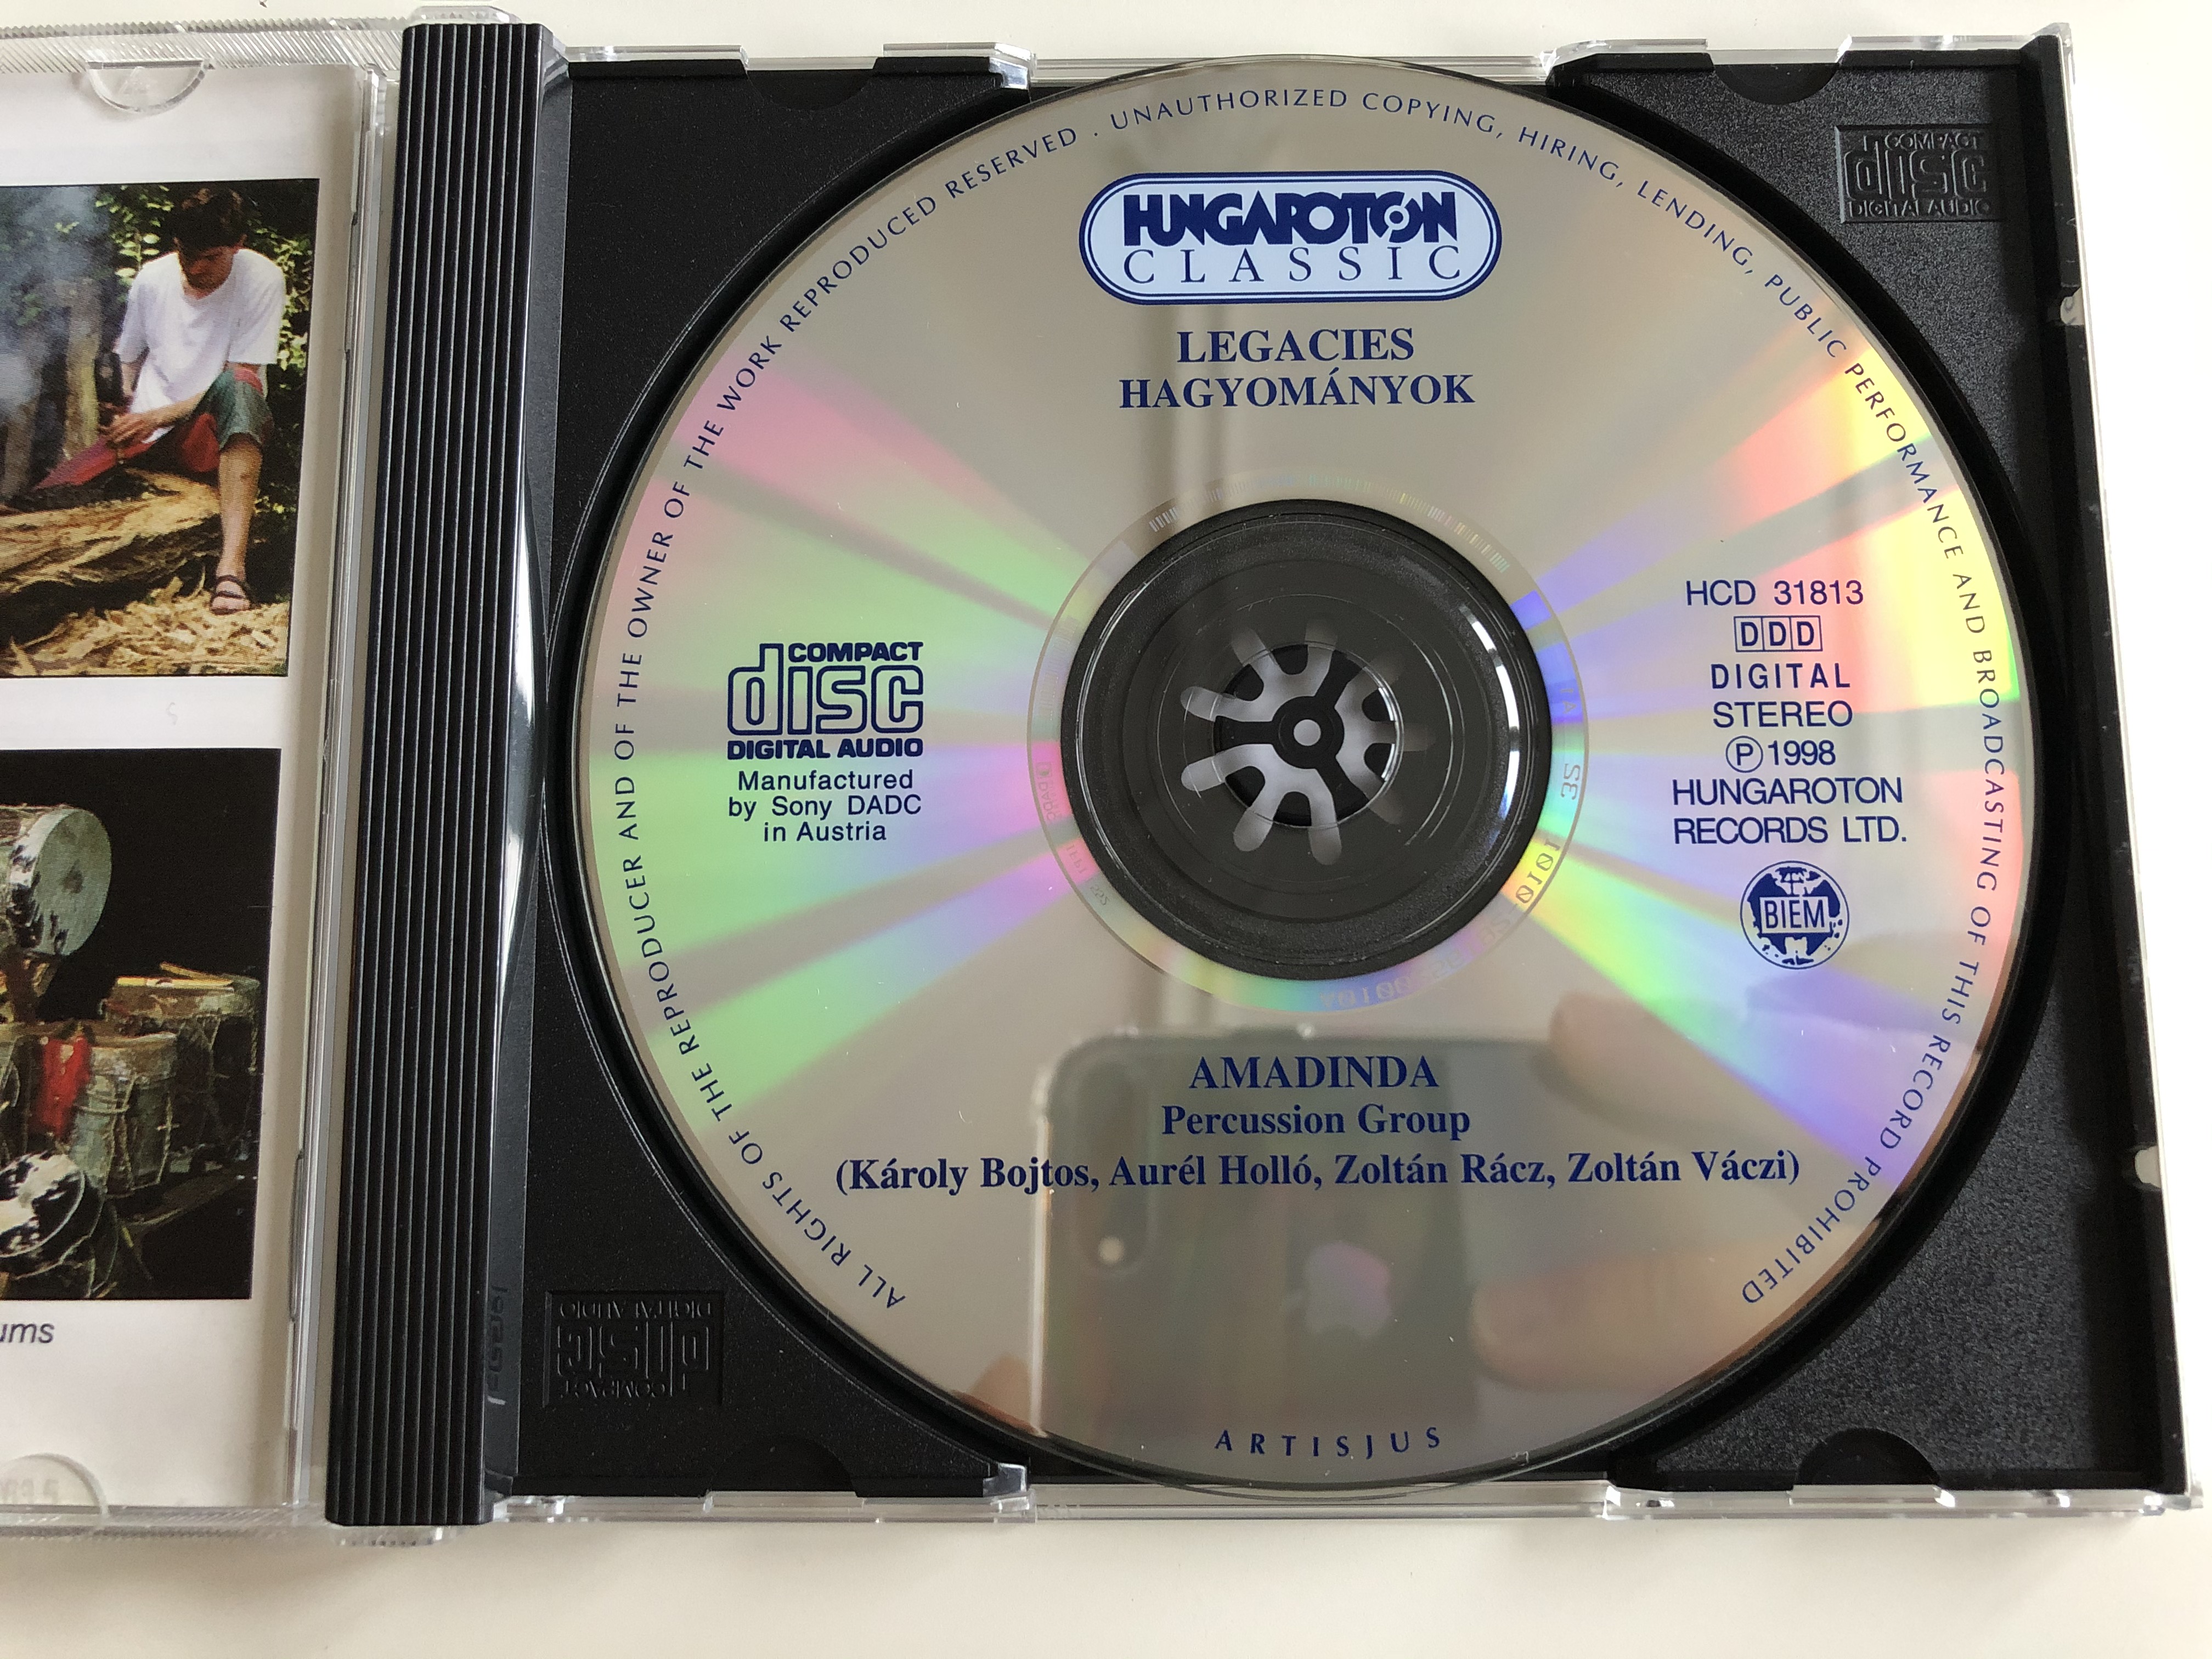 legacies-hagyom-nyok-amadinda-percussion-group-hungaroton-classic-audio-cd-1998-stereo-hcd-31813-13-.jpg